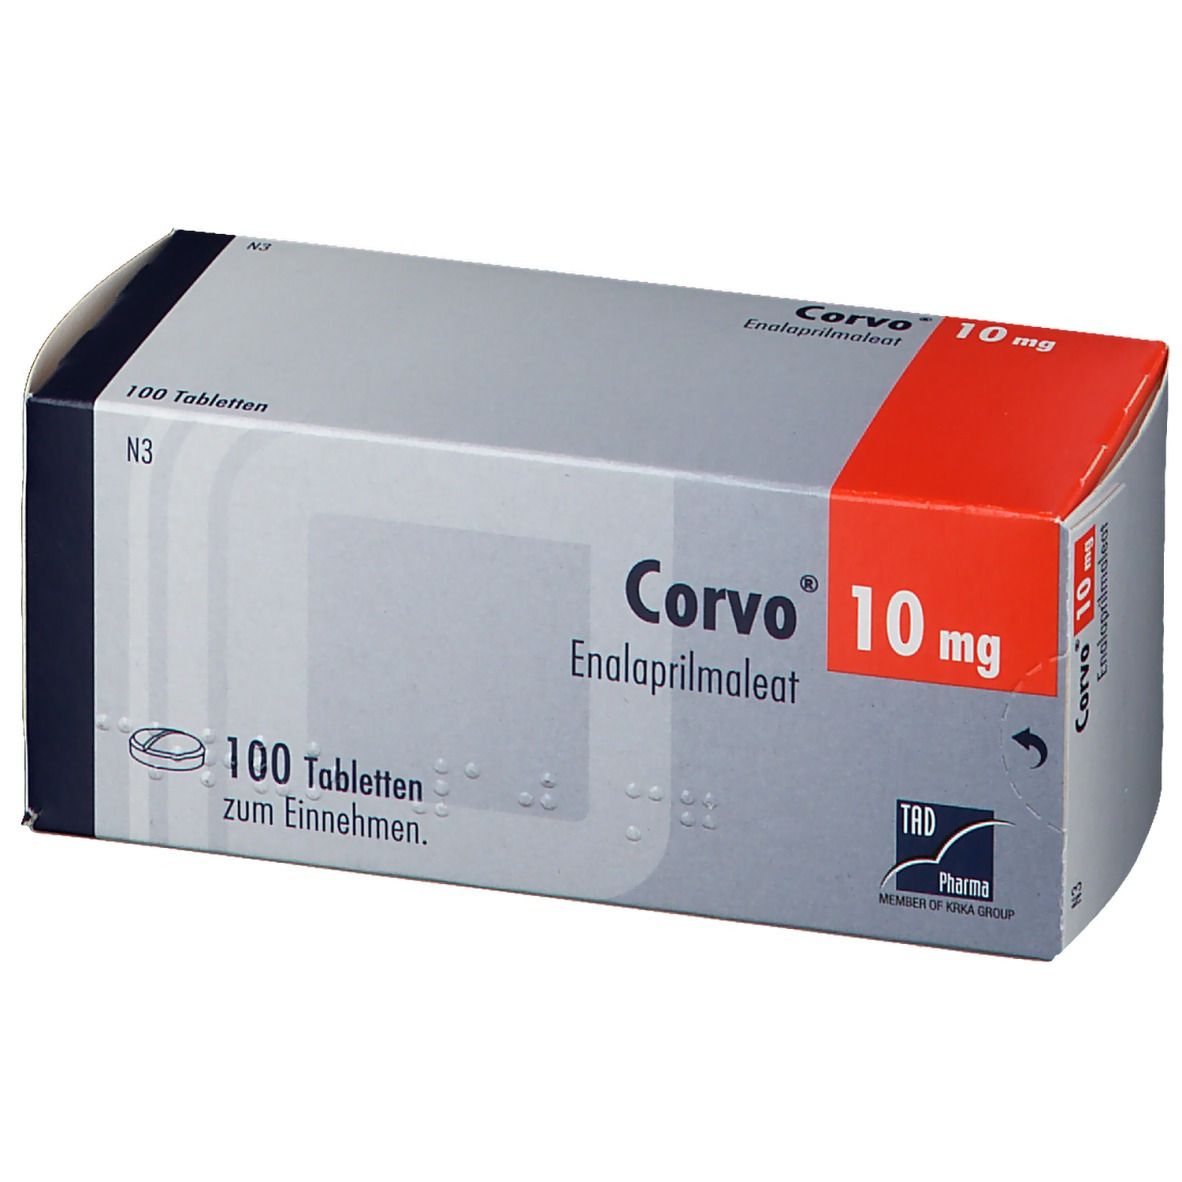 Corvo® 10 mg